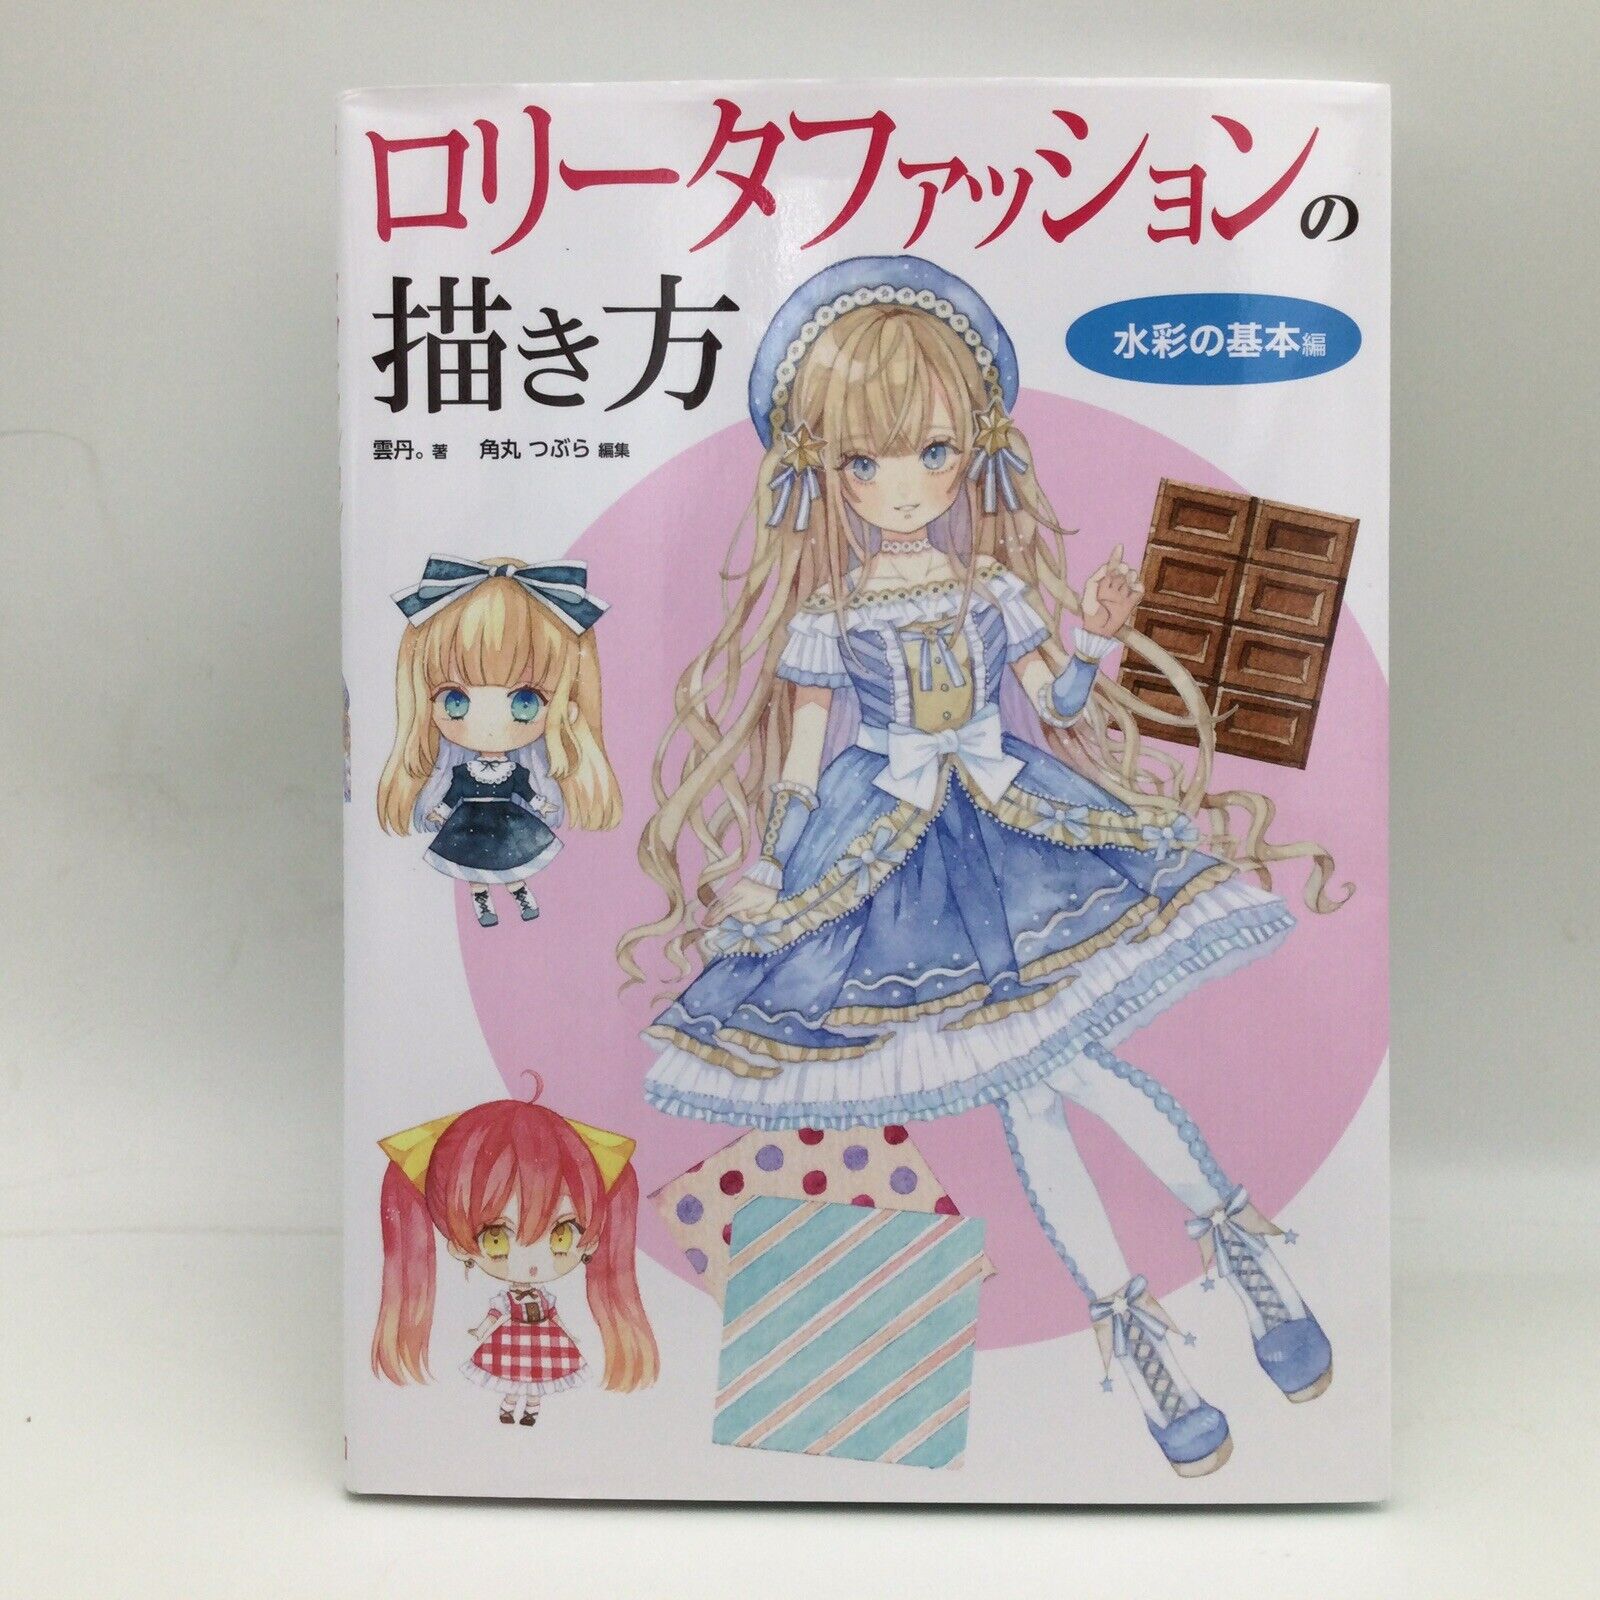 How to draw Lolita fashion Basics of watercolor Manga Illustration Japan